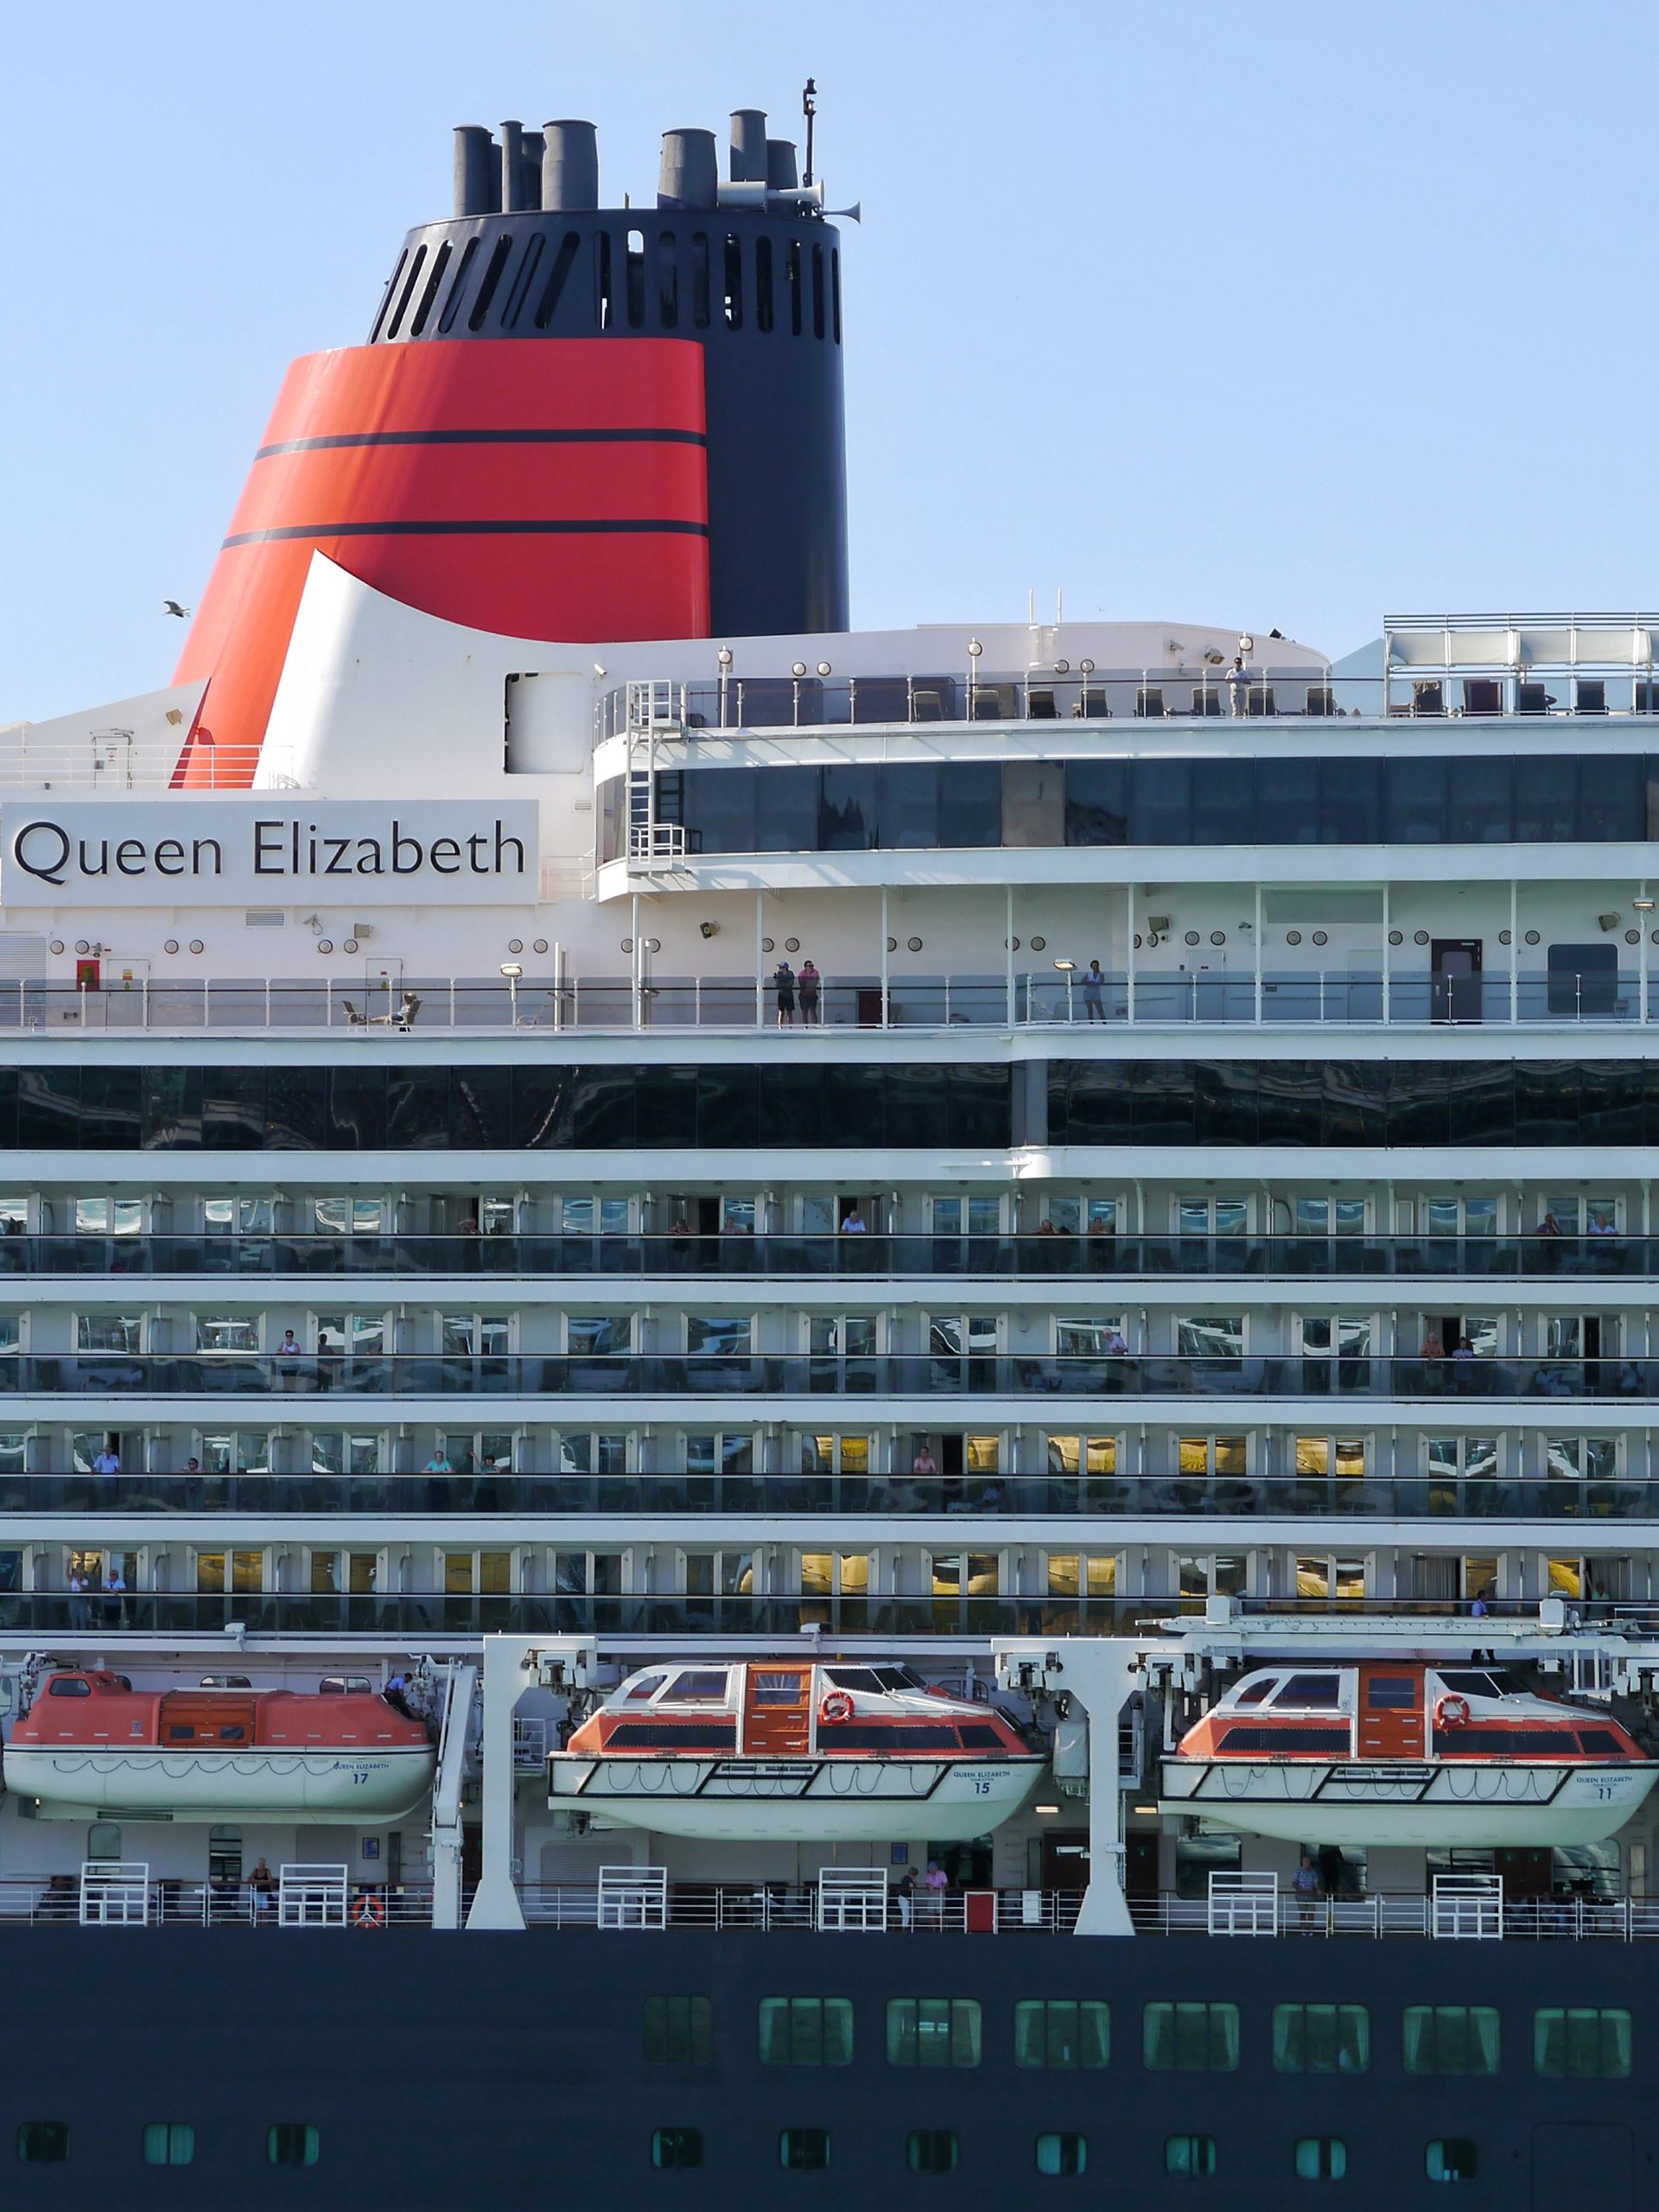 ocean liner vs cruise ship size